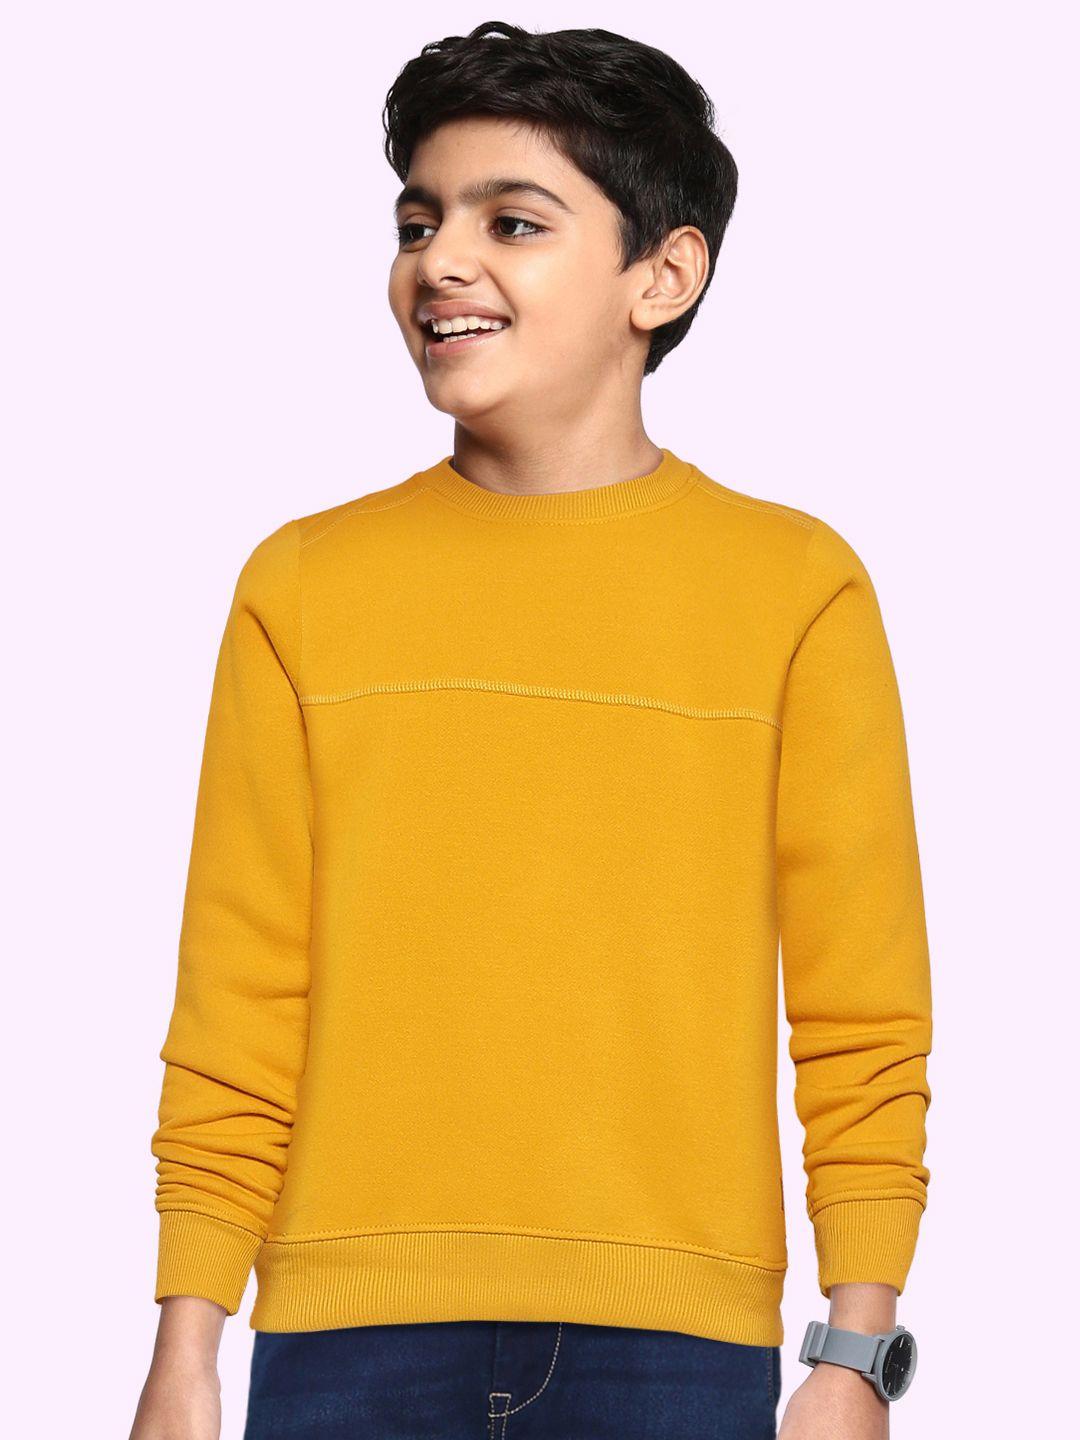 uth by roadster boys mustard yellow solid sweatshirt